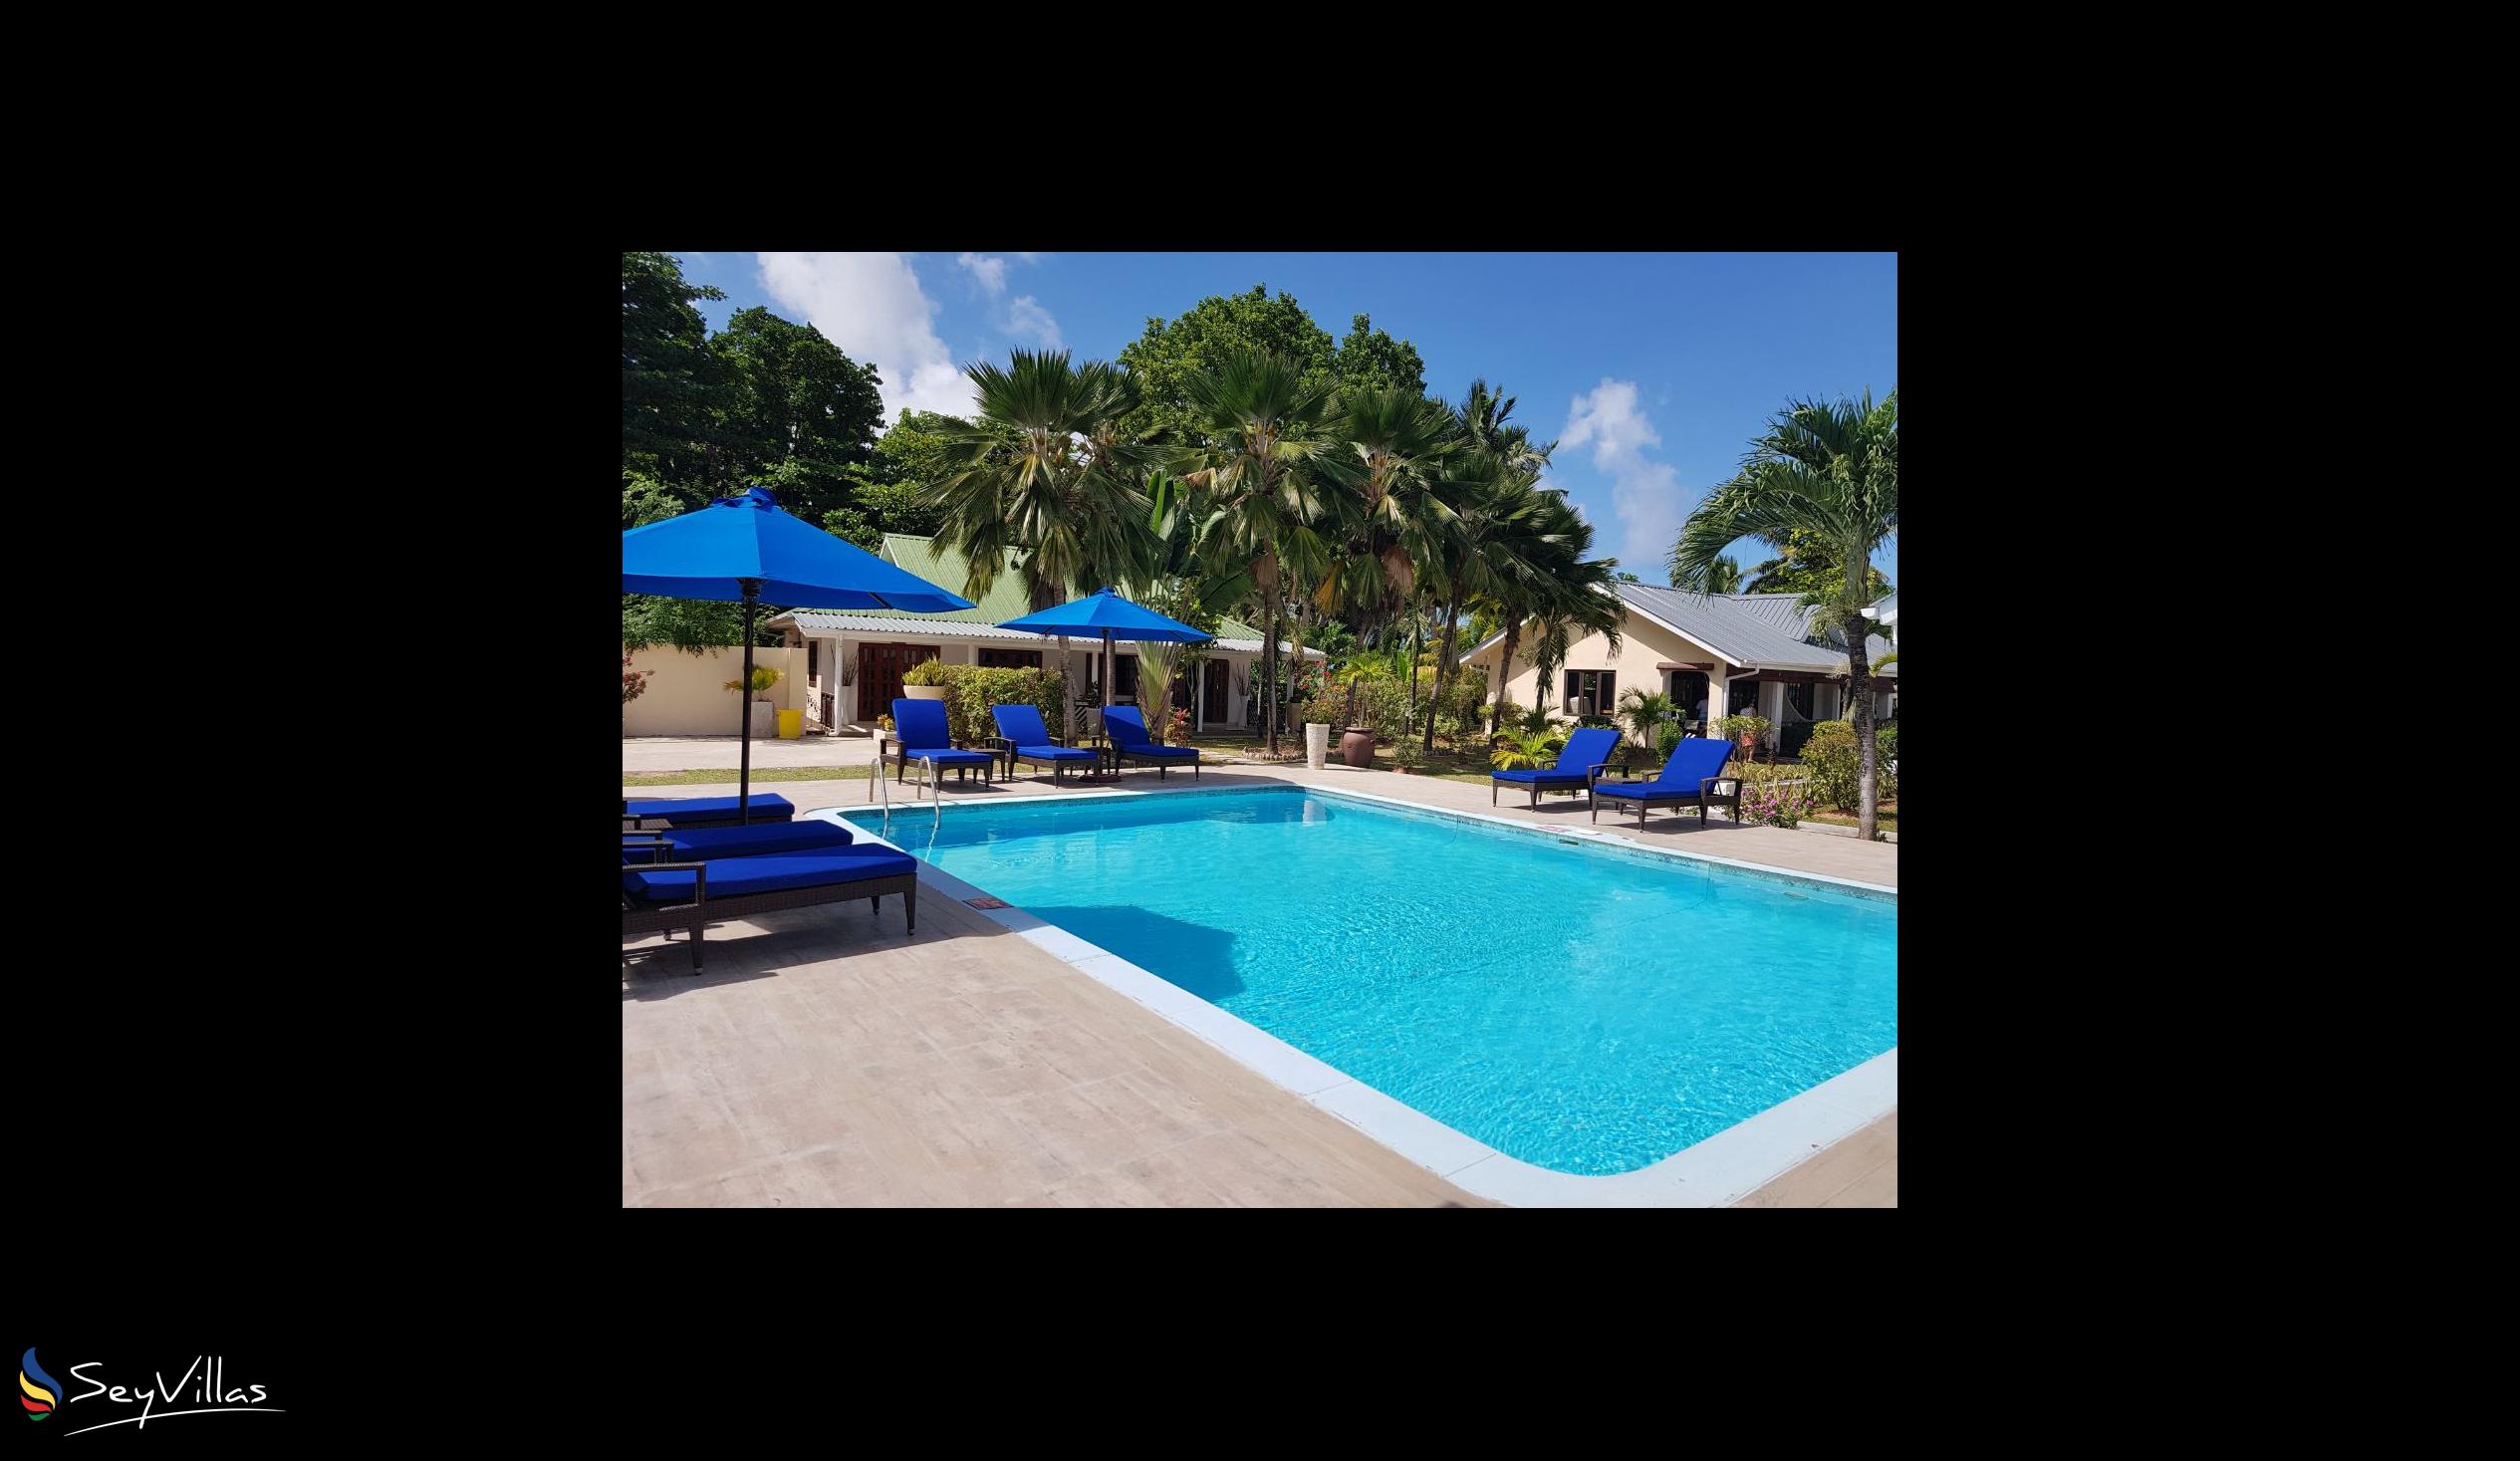 Foto 2: Villas de Mer - Aussenbereich - Praslin (Seychellen)